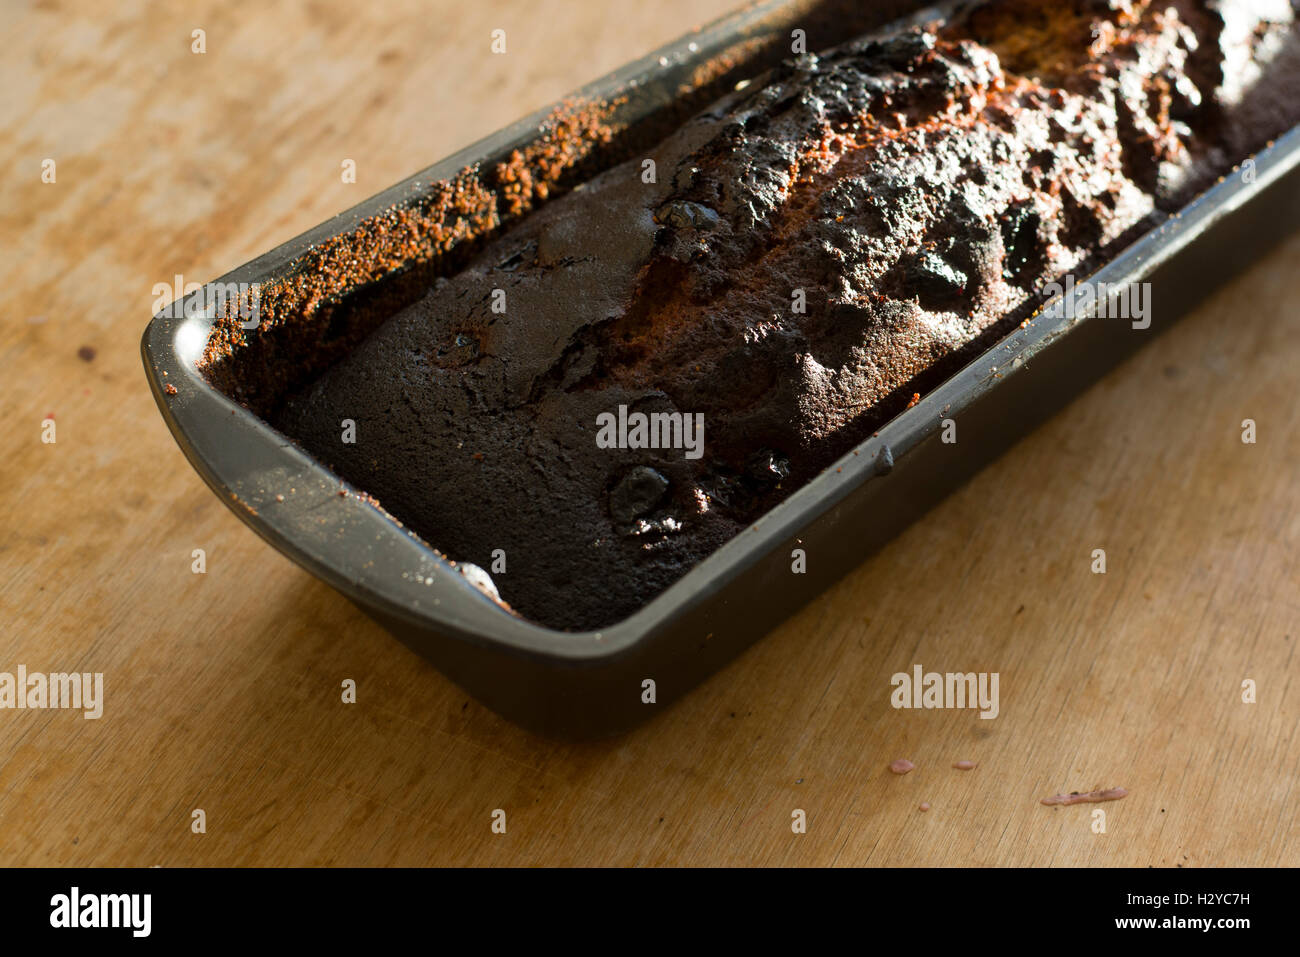 https://c8.alamy.com/comp/H2YC7H/clos-up-on-burned-gingerbread-on-wood-table-H2YC7H.jpg